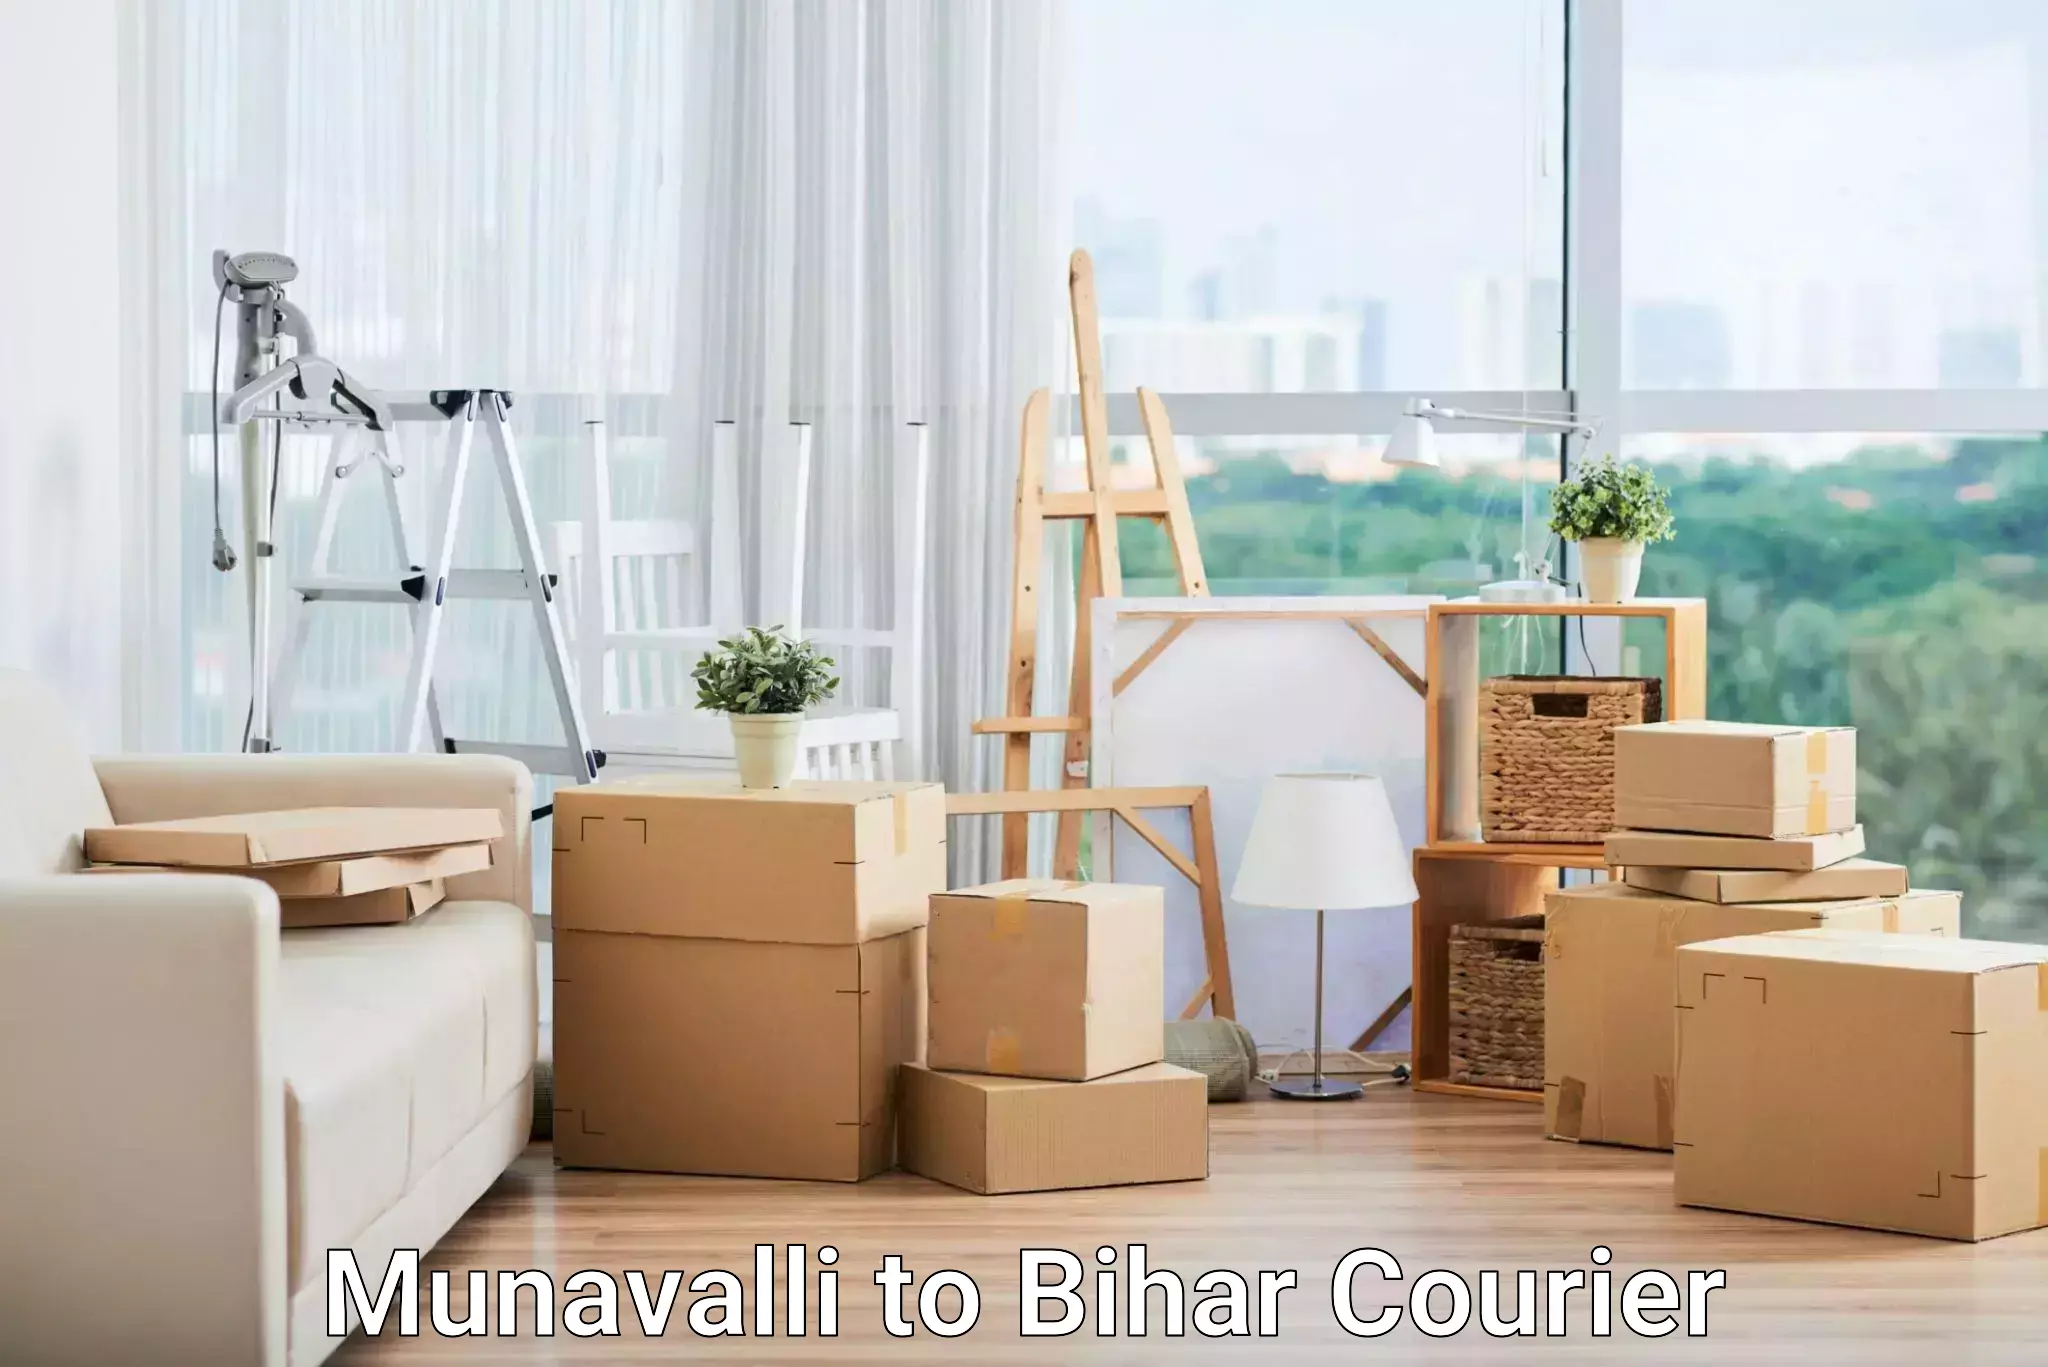 Package delivery network Munavalli to Bihar